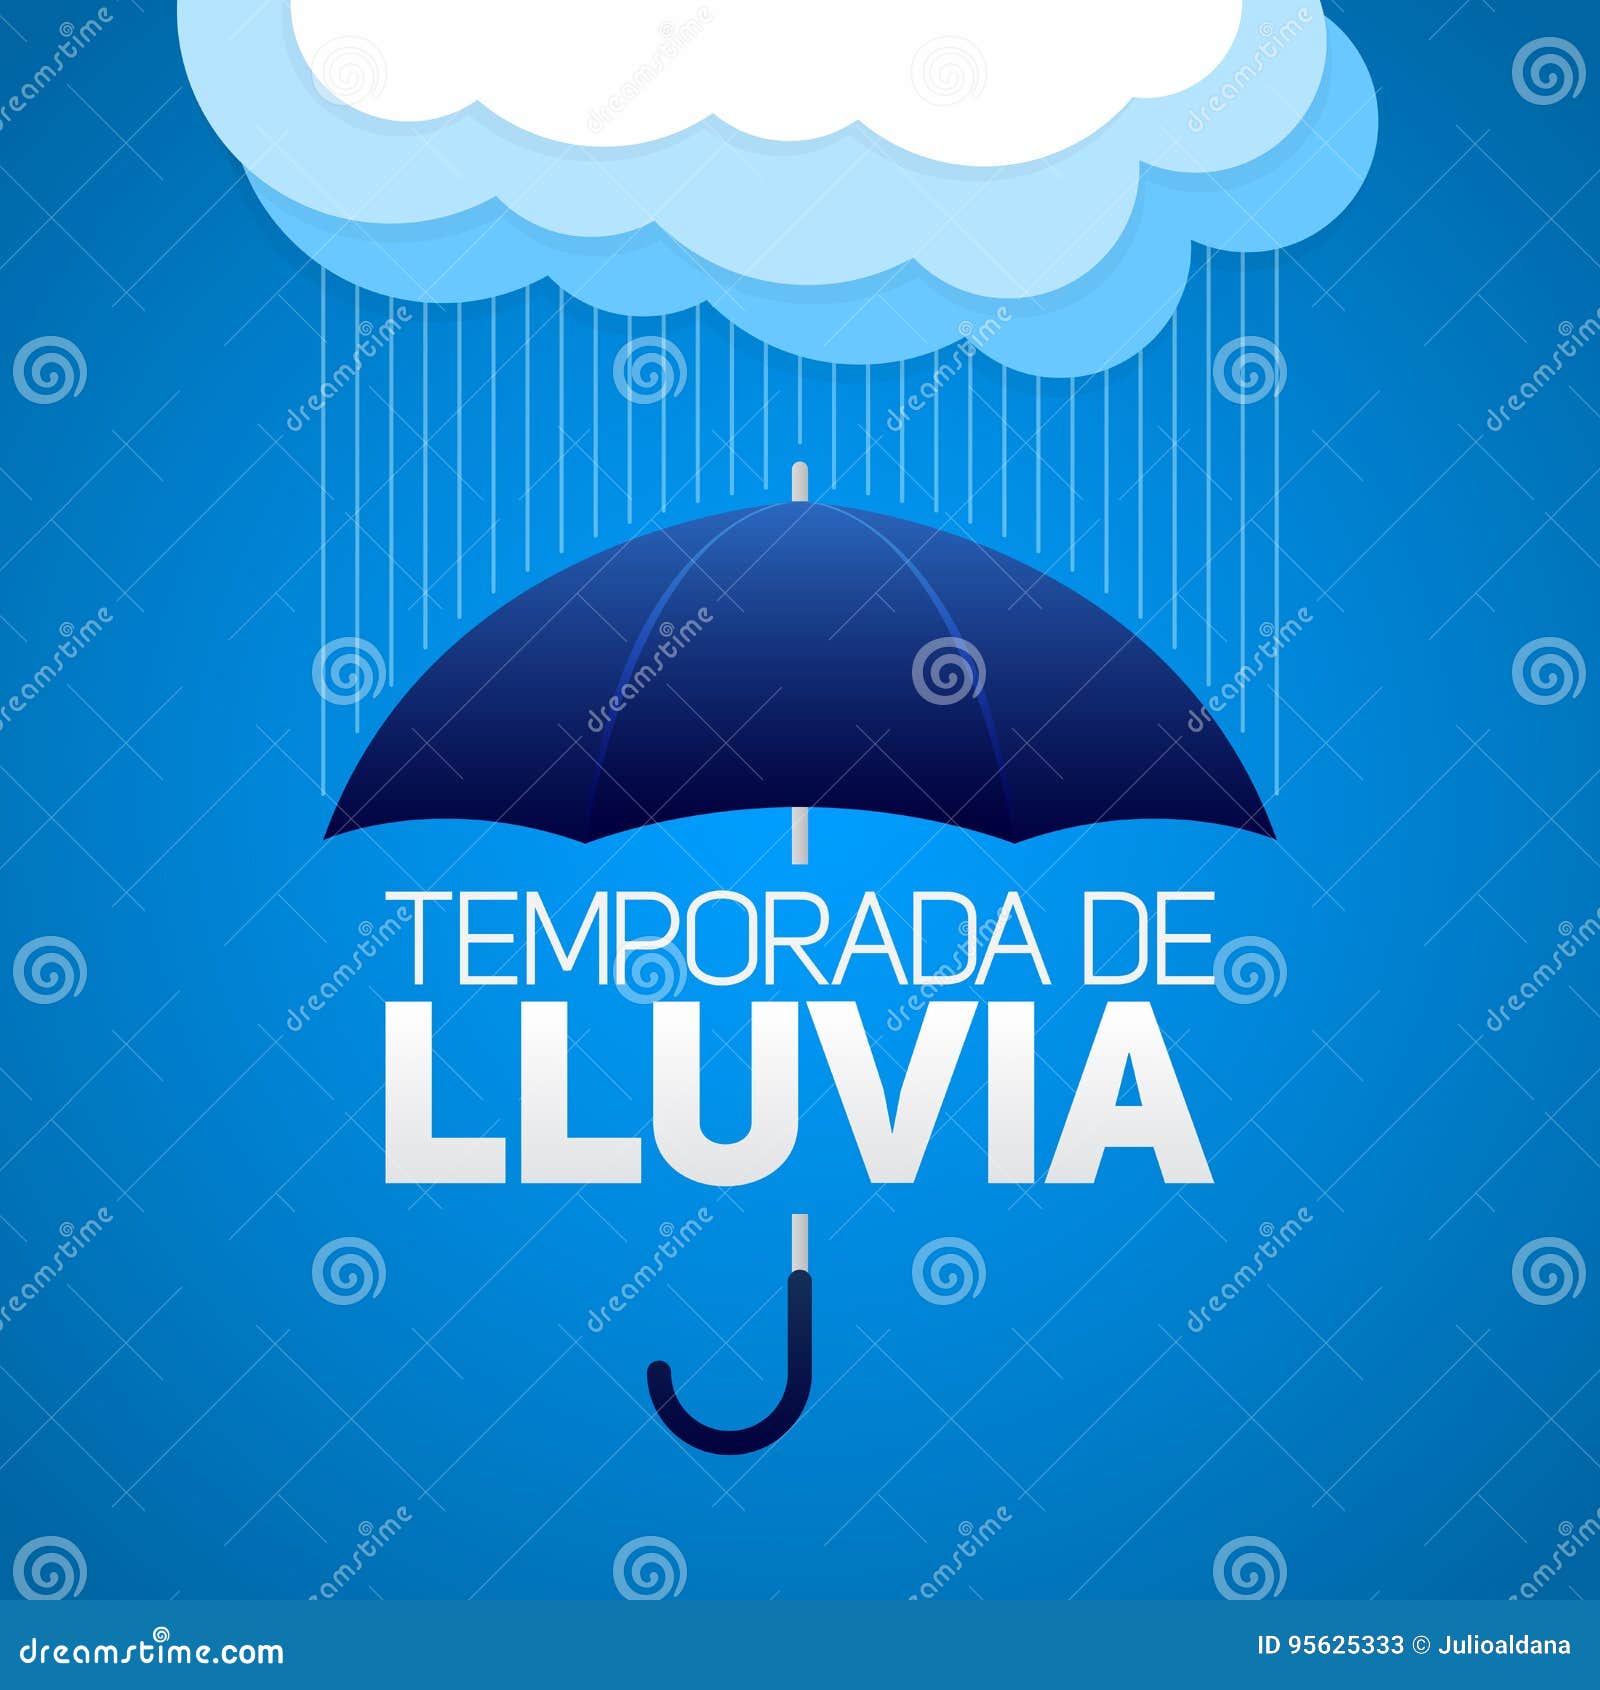 temporada de lluvia, rain season spanish text, umbrella with clouds